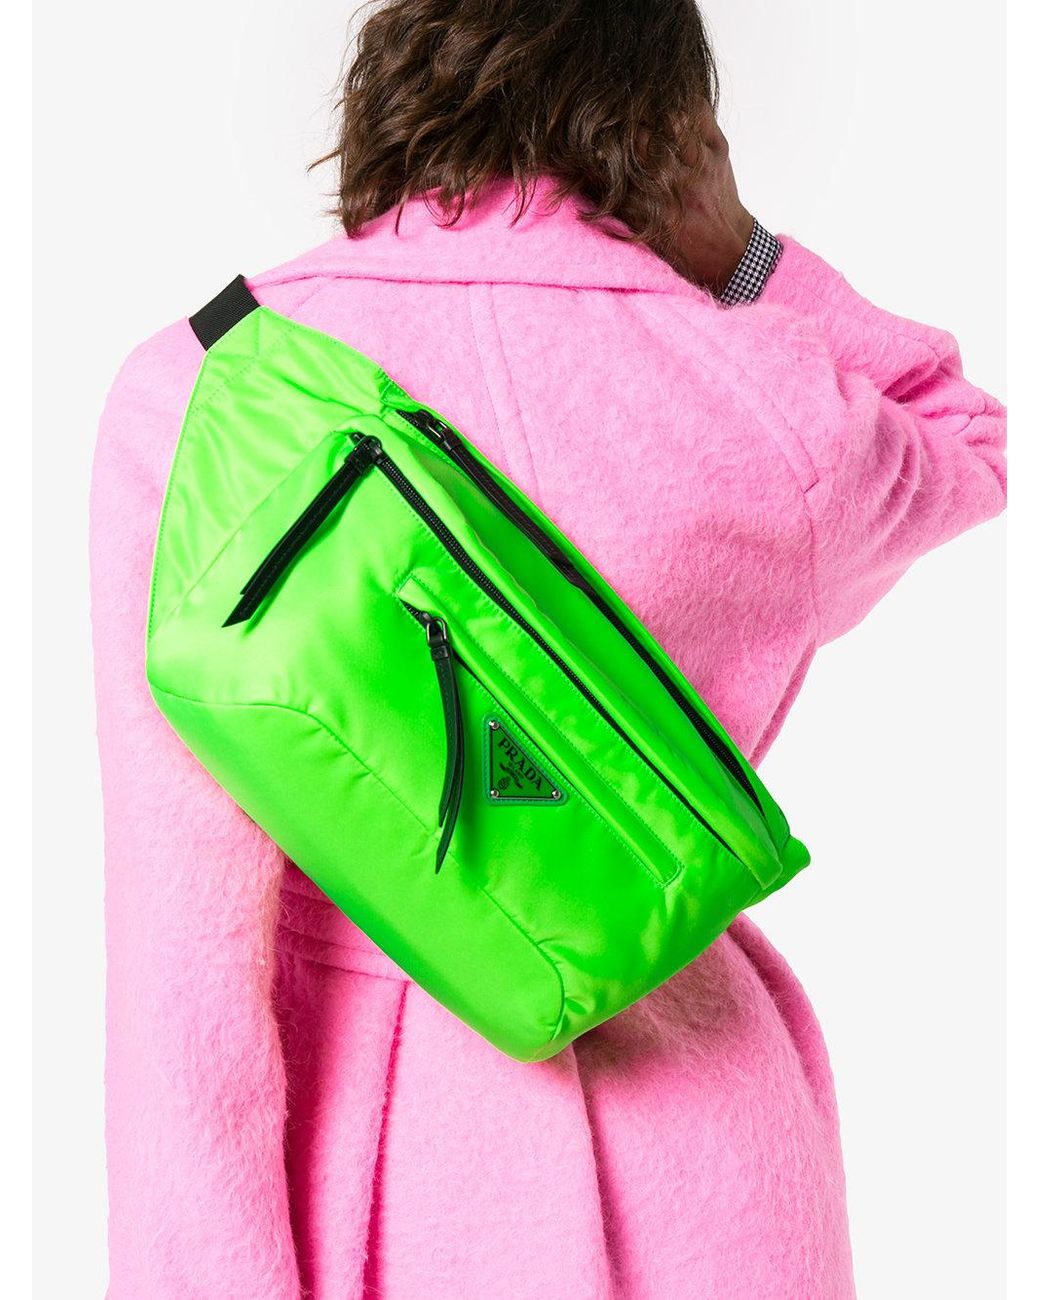 PRADA Puffer Nylon Tote Bag Neon Green 526663